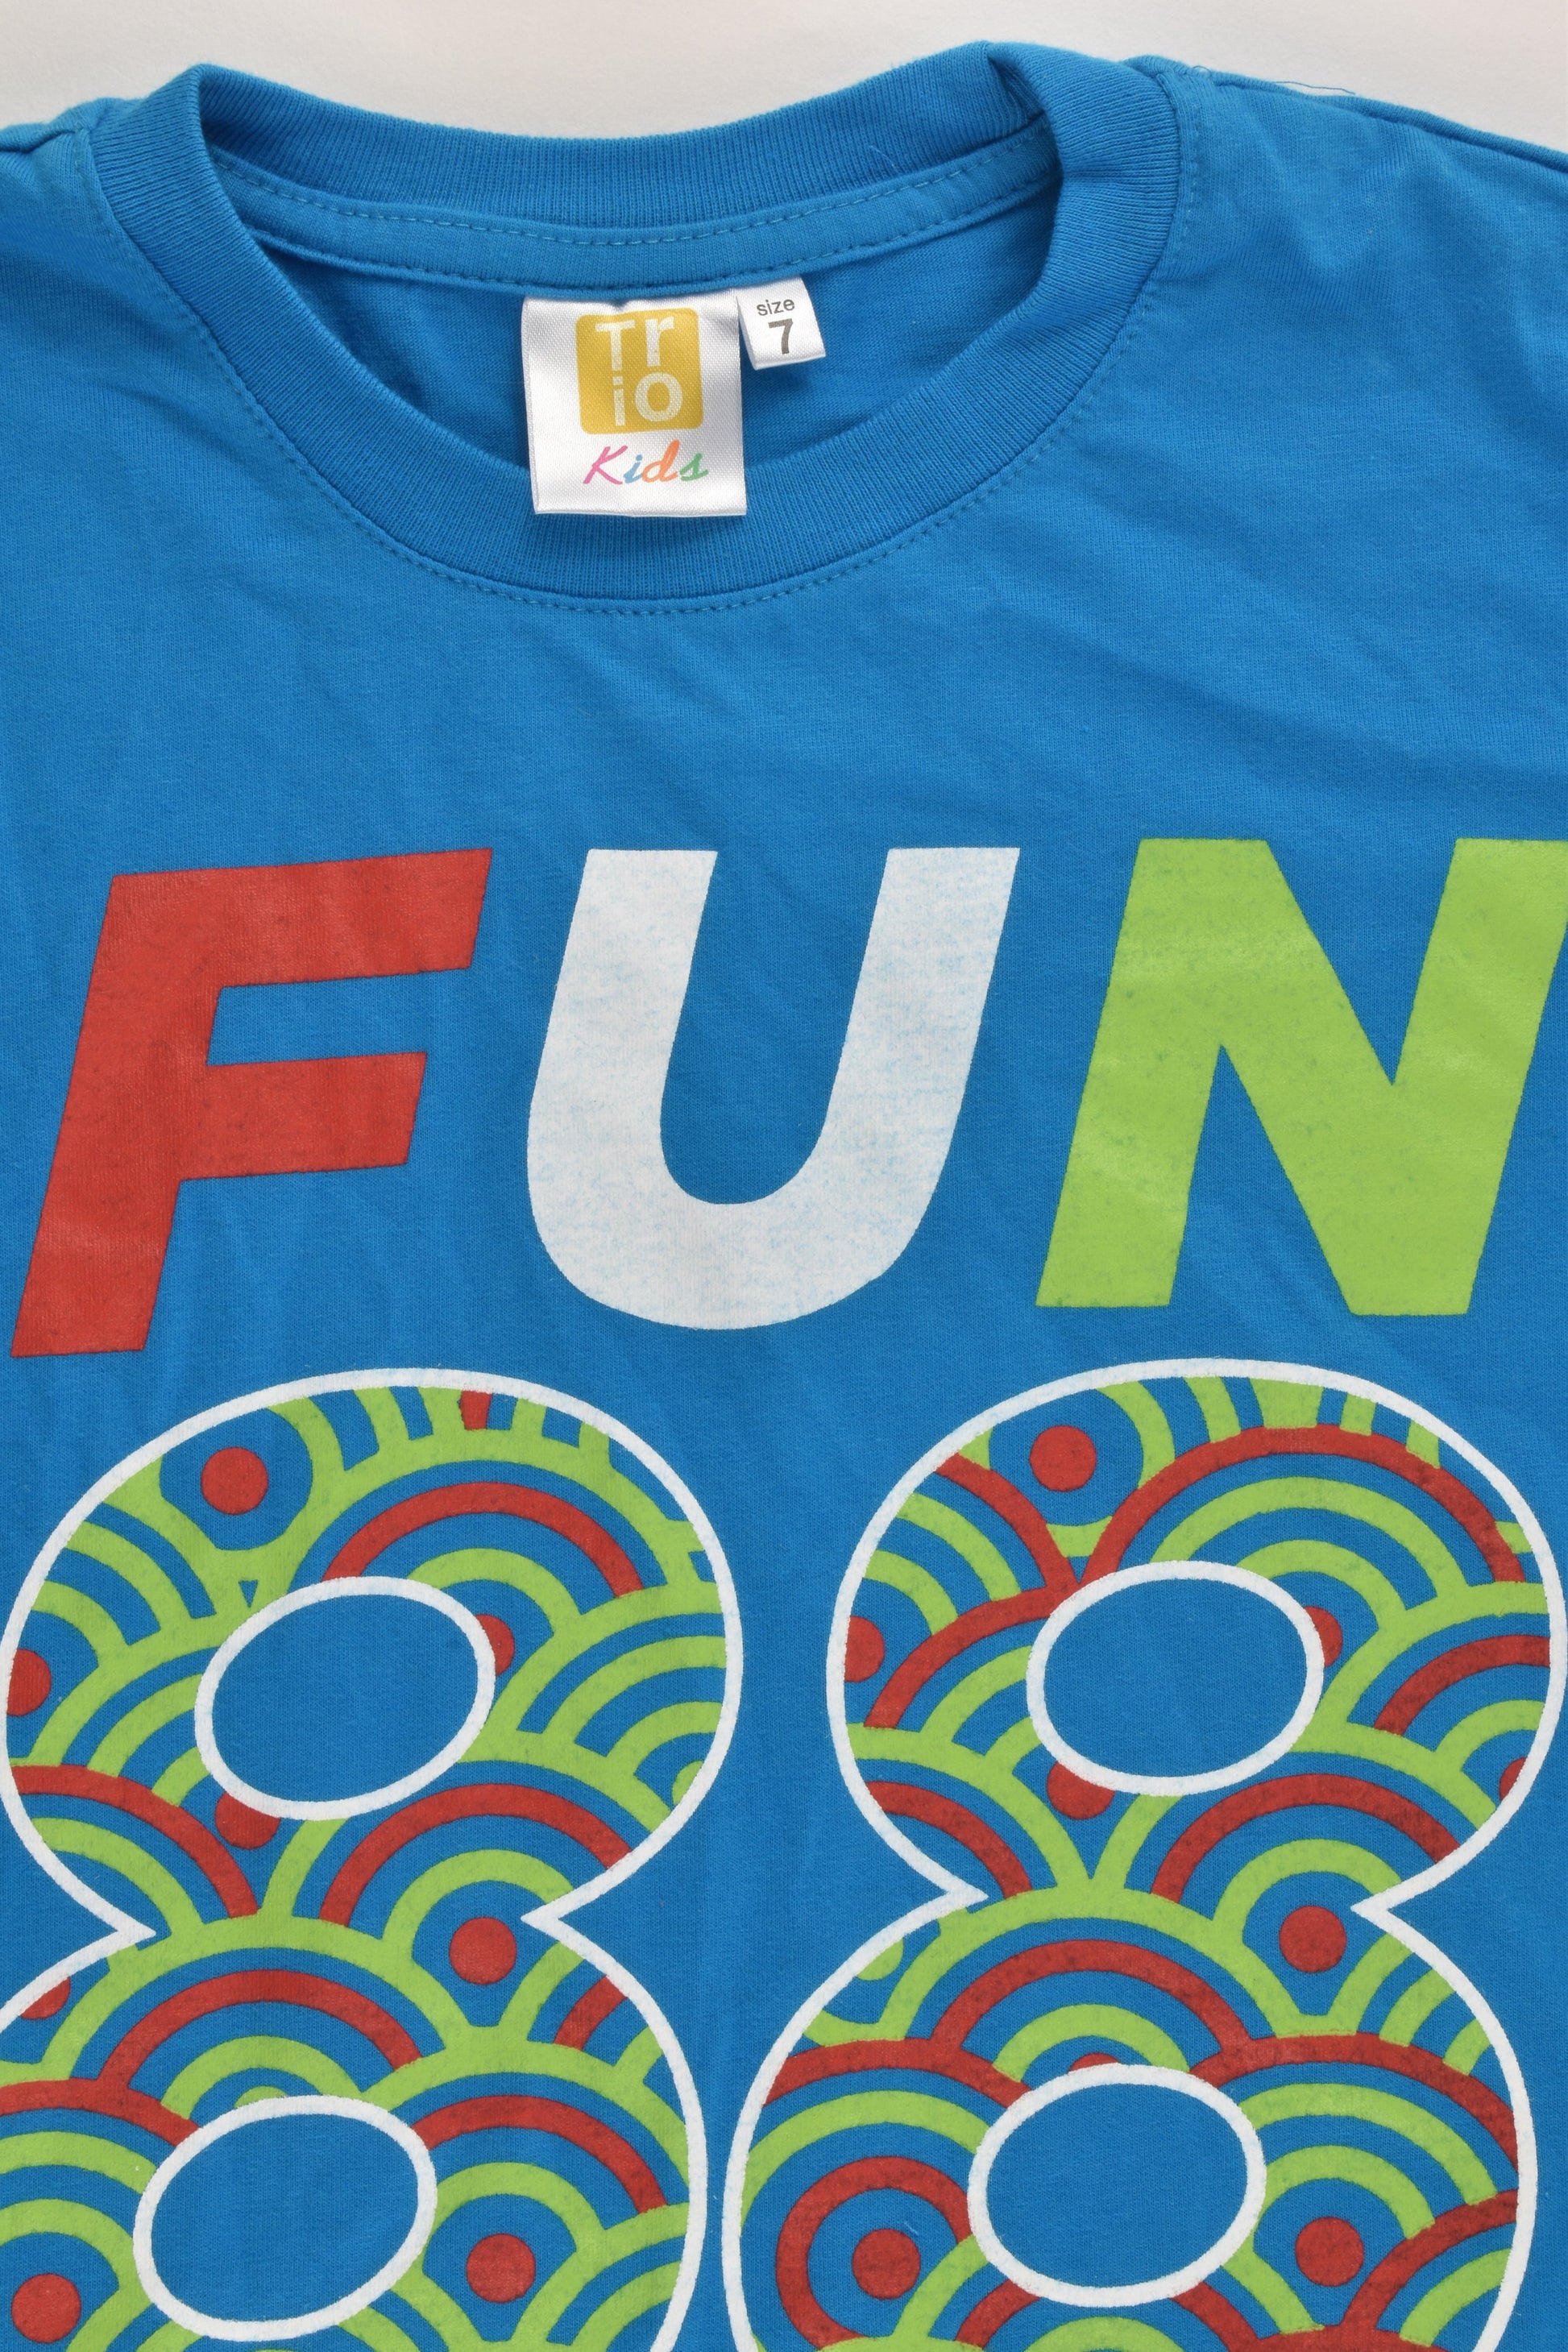 NEW Trio Kids Size 7 'Fun 88' T-shirt